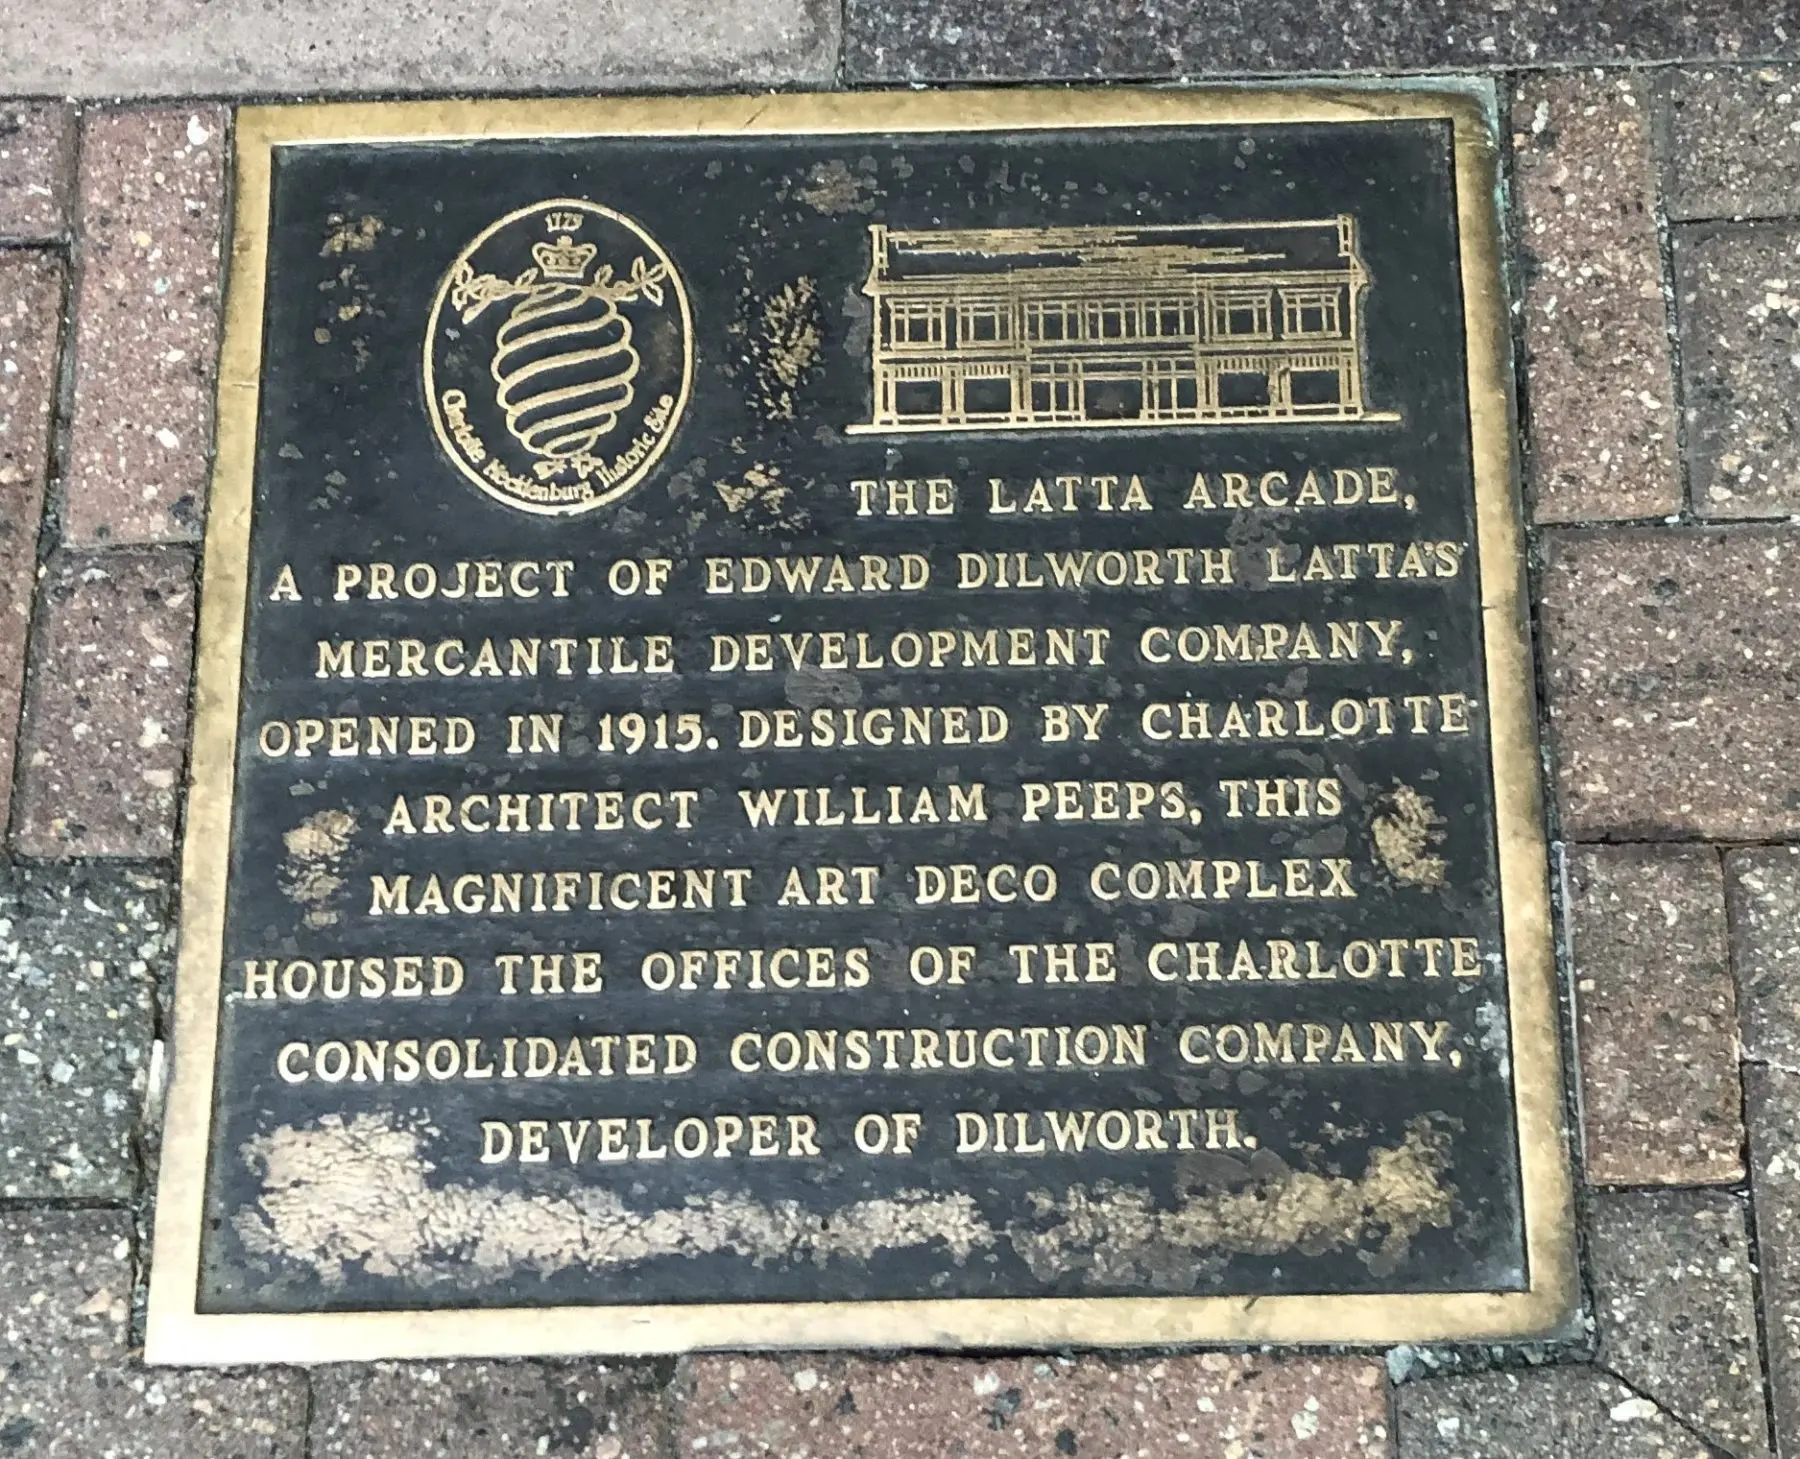 An image of the historic marker at Latta Arcade.